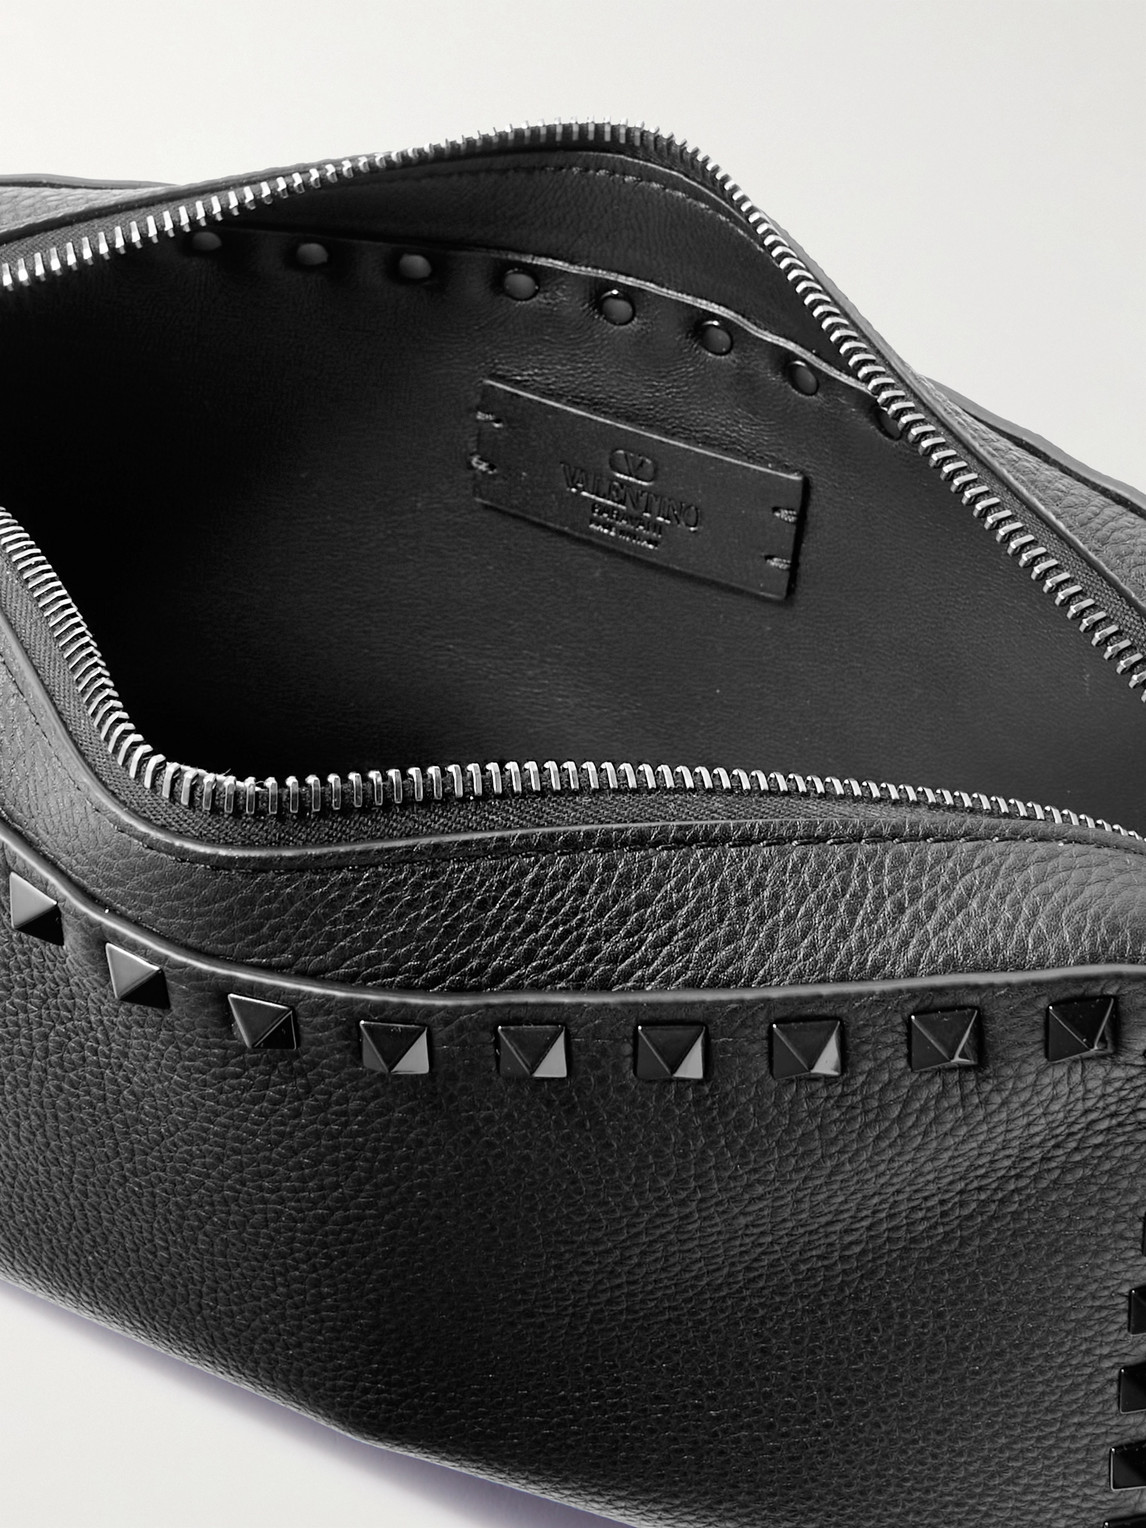 VALENTINO GARAVANI: Rockstud clutch in grained leather - Black